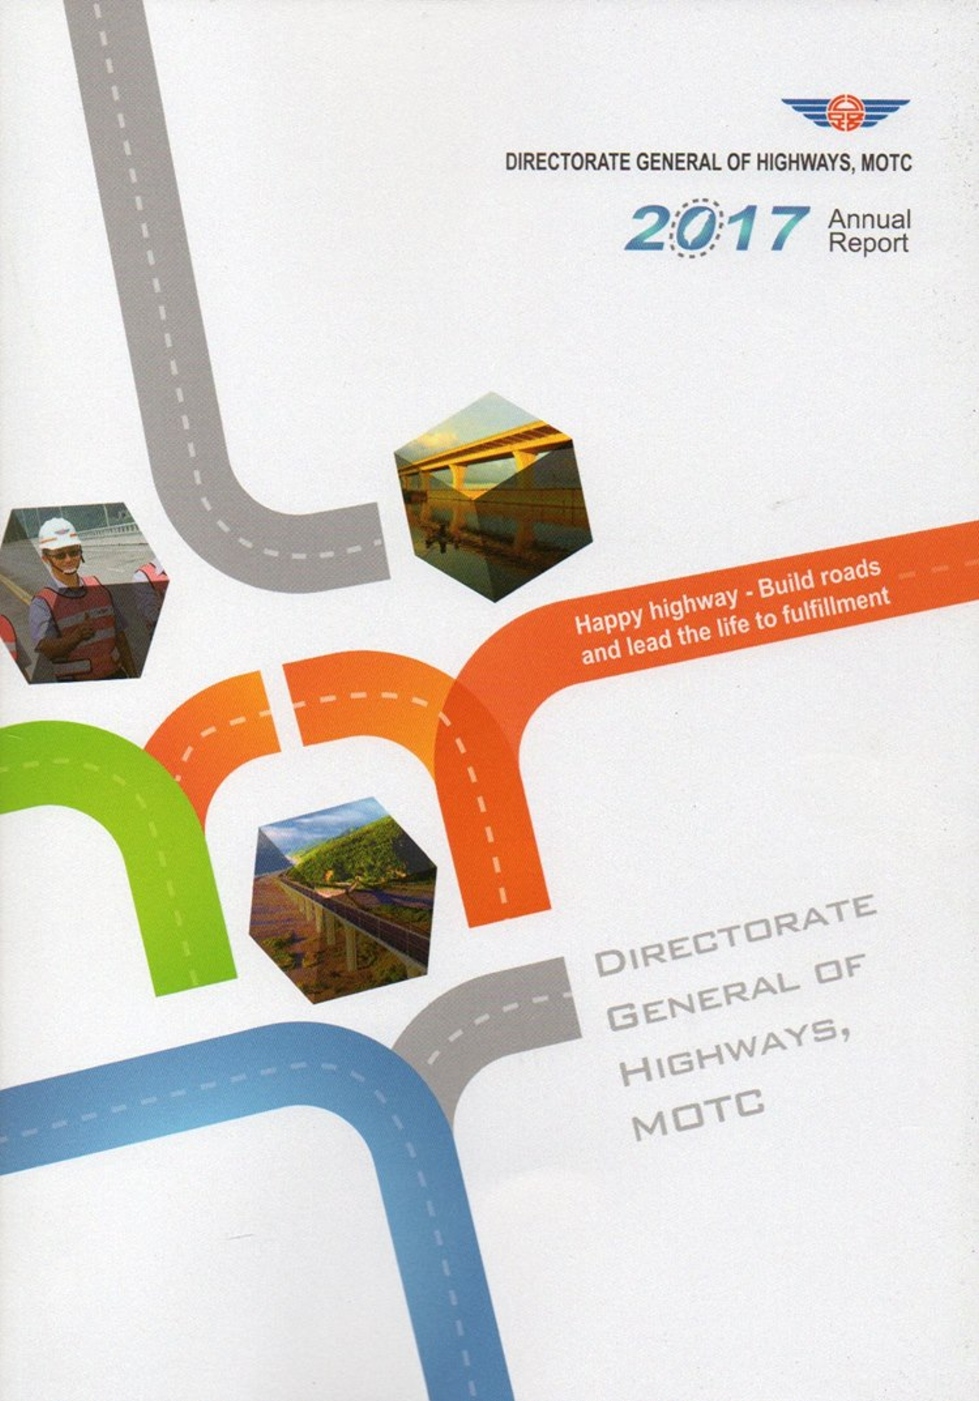 2017 Annual Report of Directorate General of Highways, MOTC‵（附光碟）